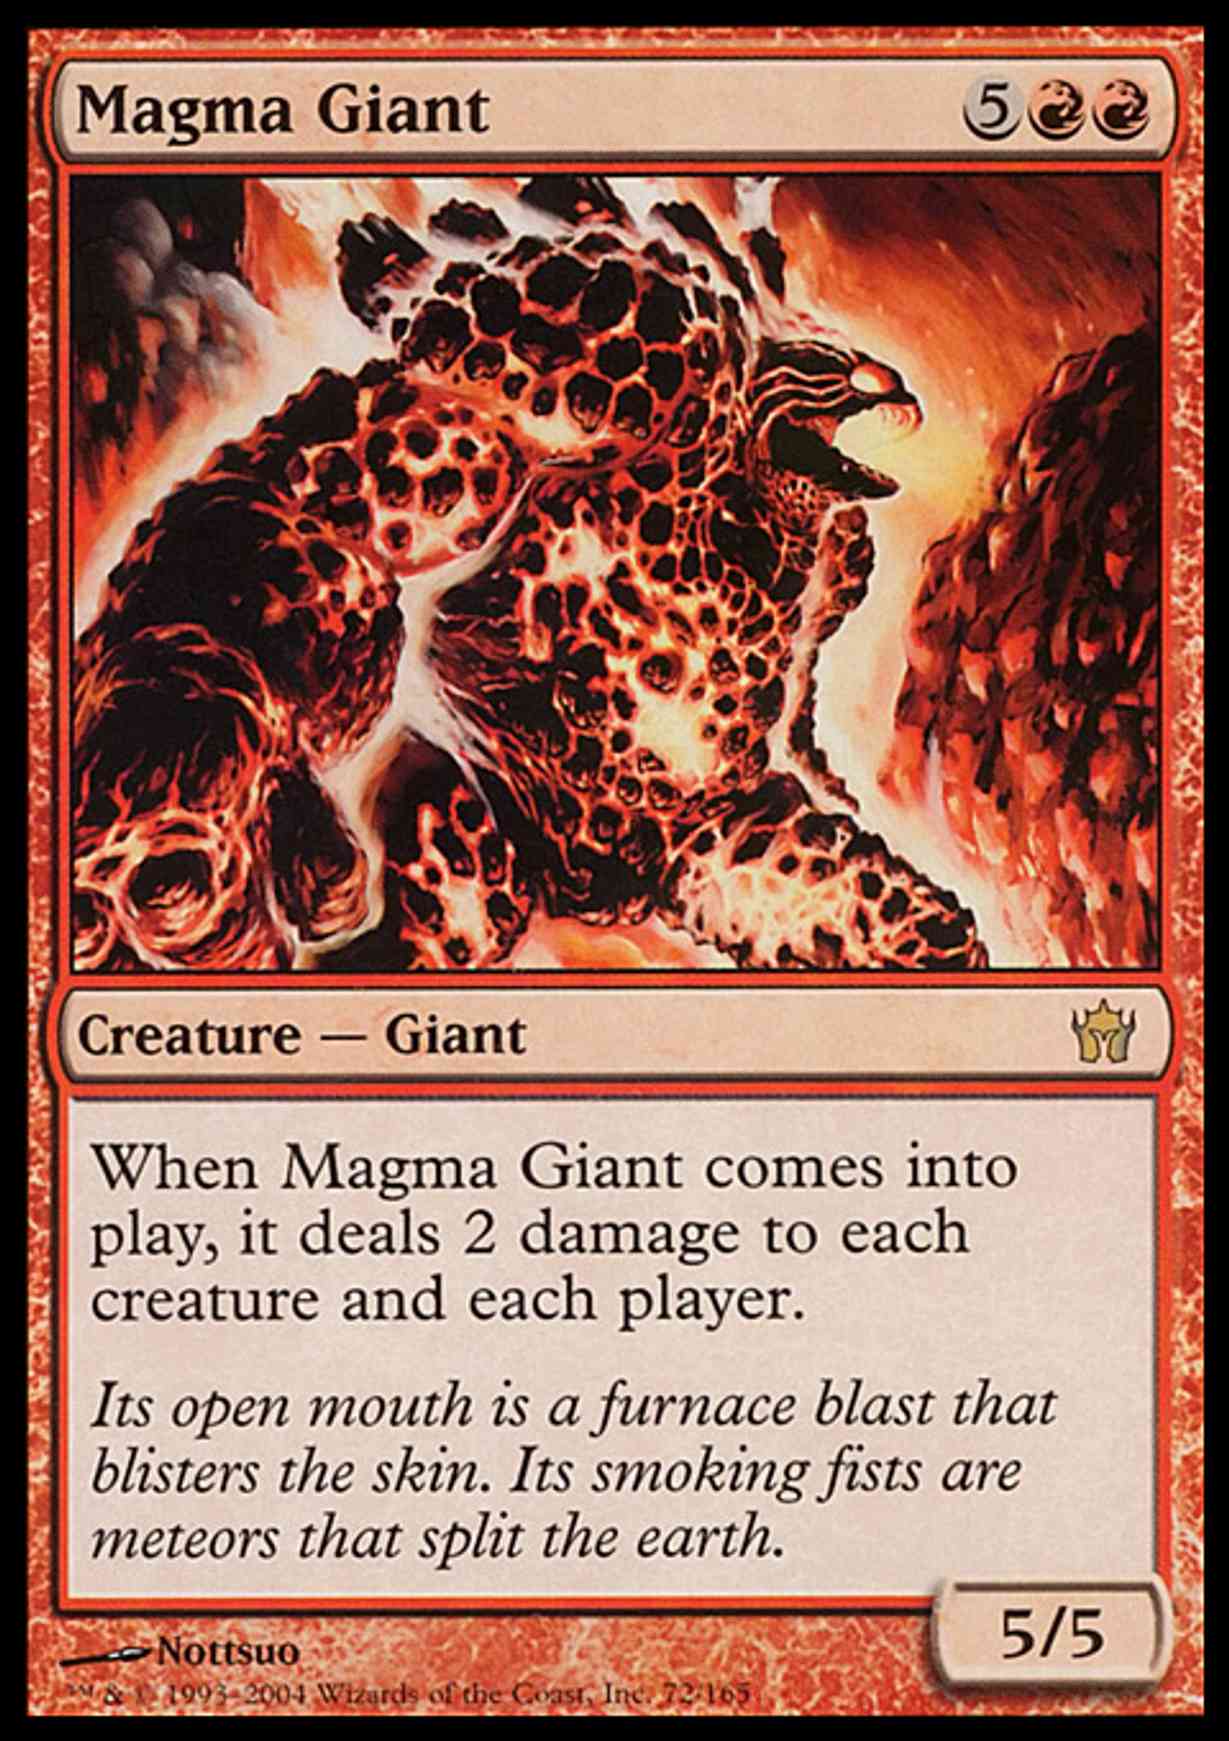 Magma Giant magic card front